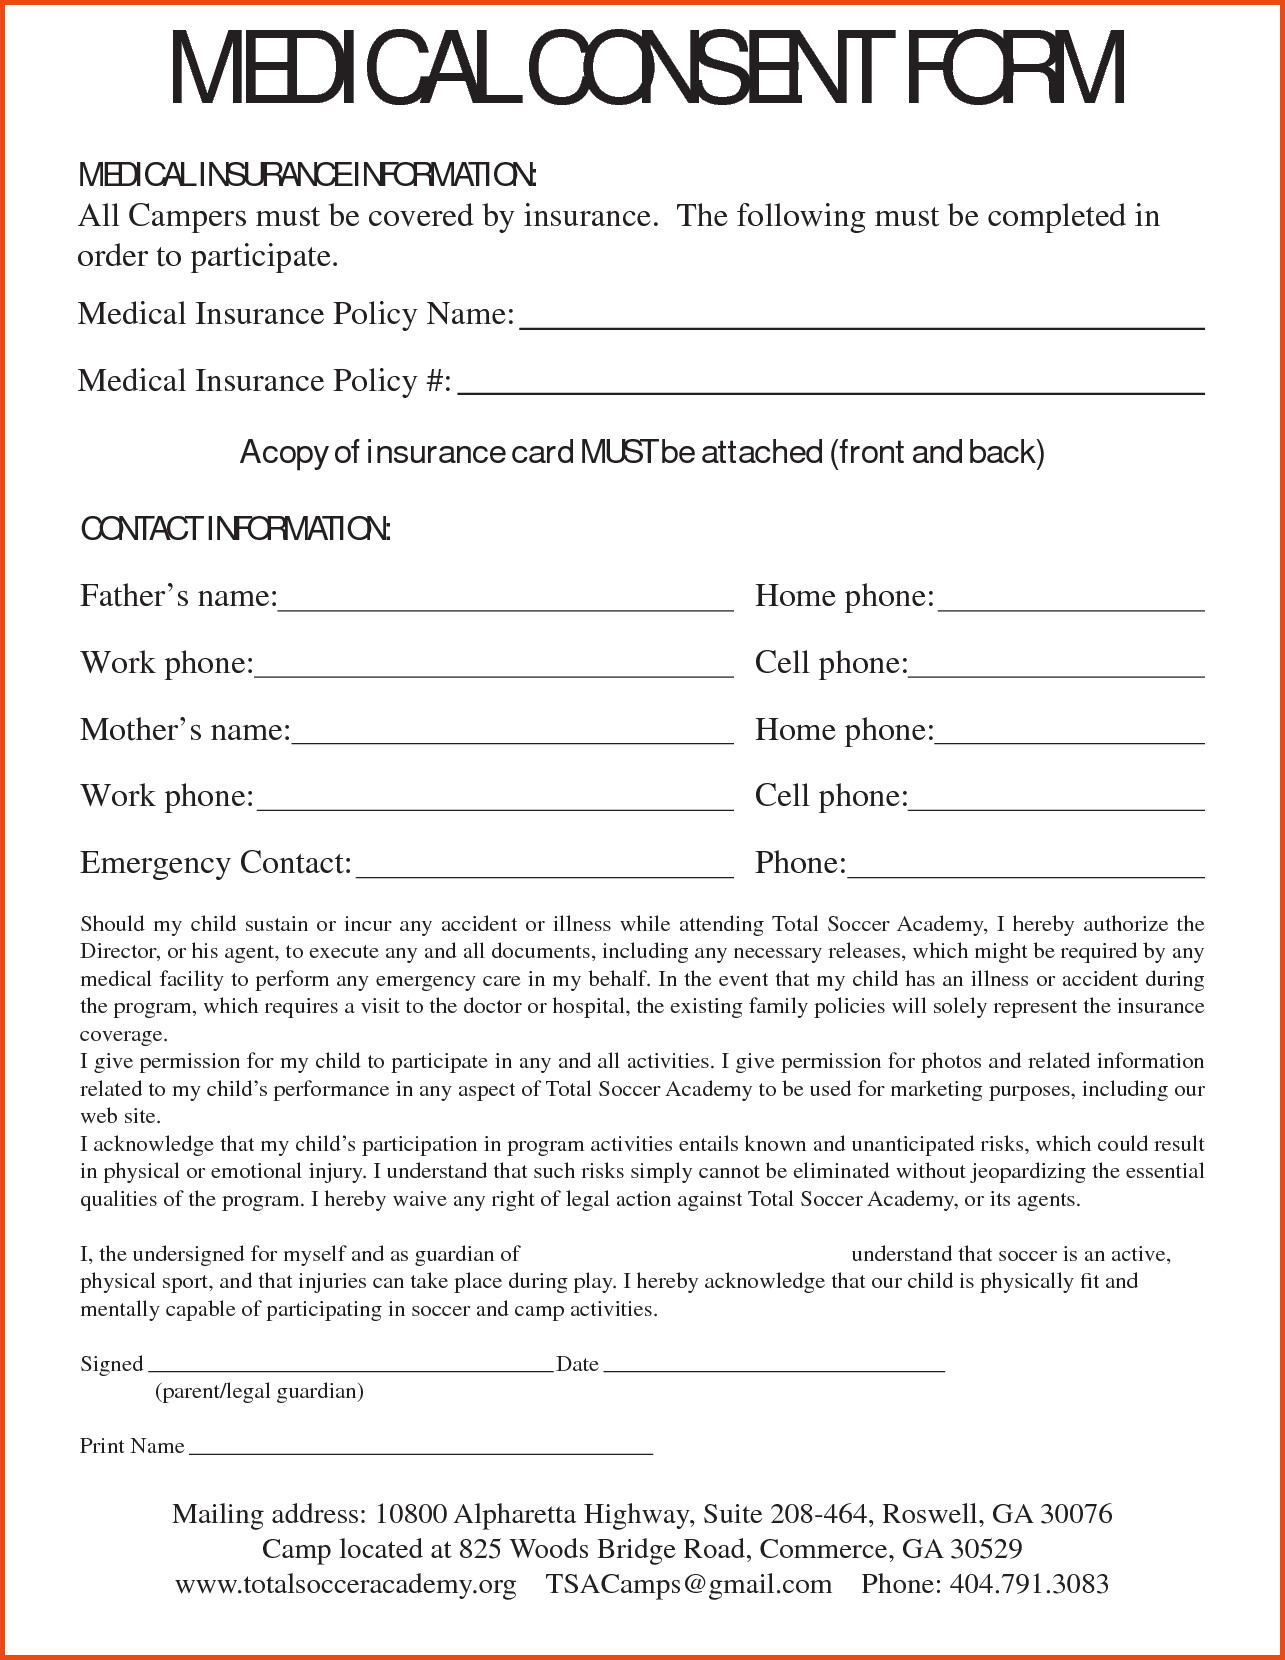 Medical Consent Letter Template - Parental Consent form Template Awesome Notarized Letter Template for